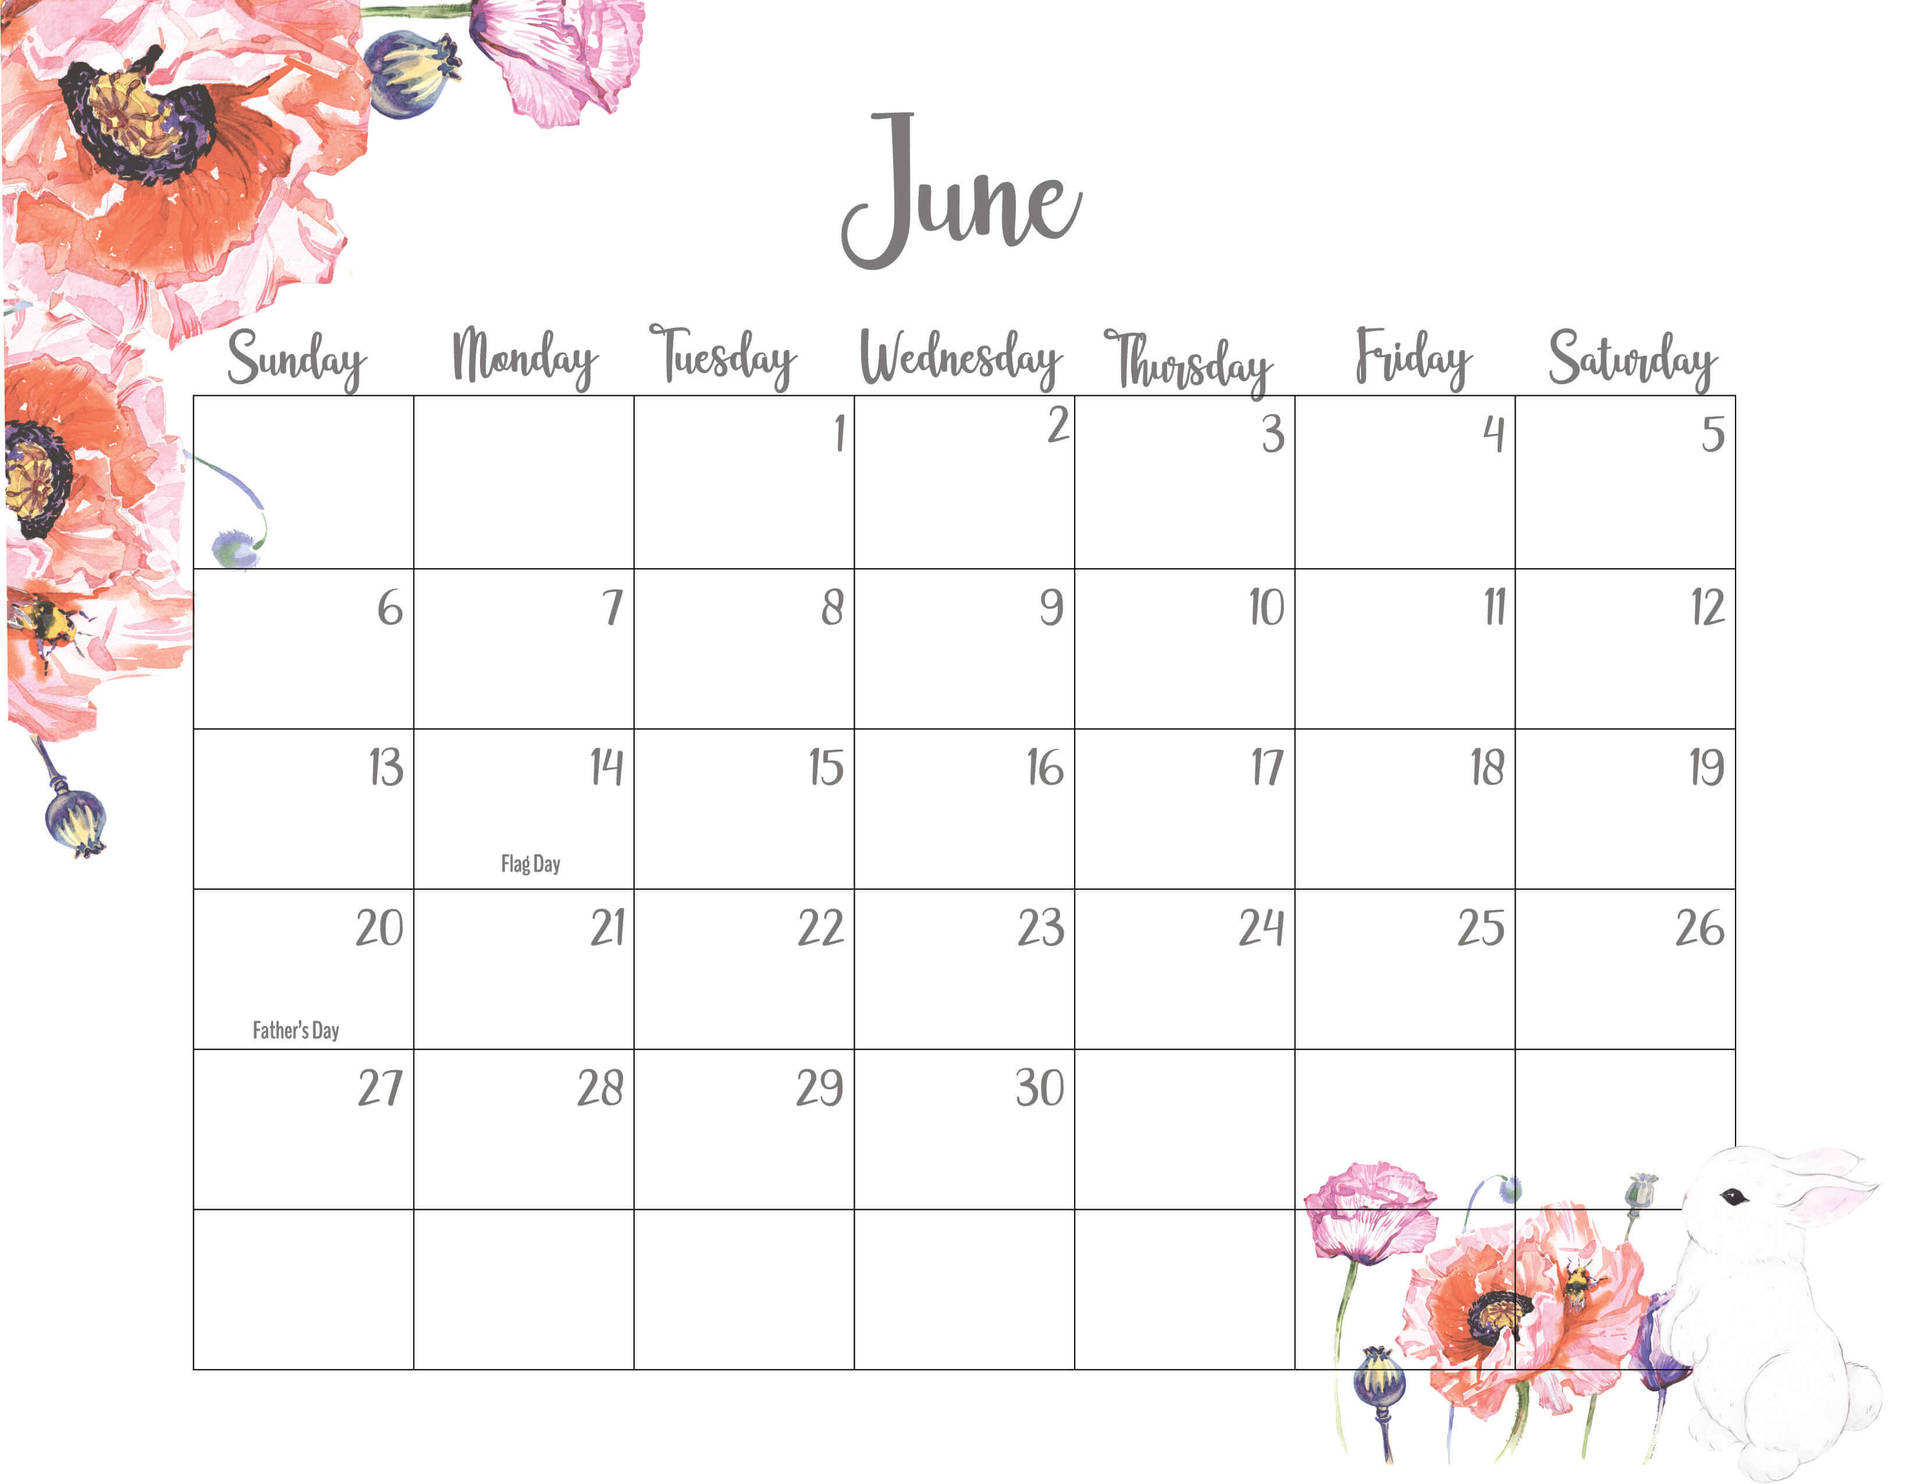 June Floral Agenda Calendar 2021